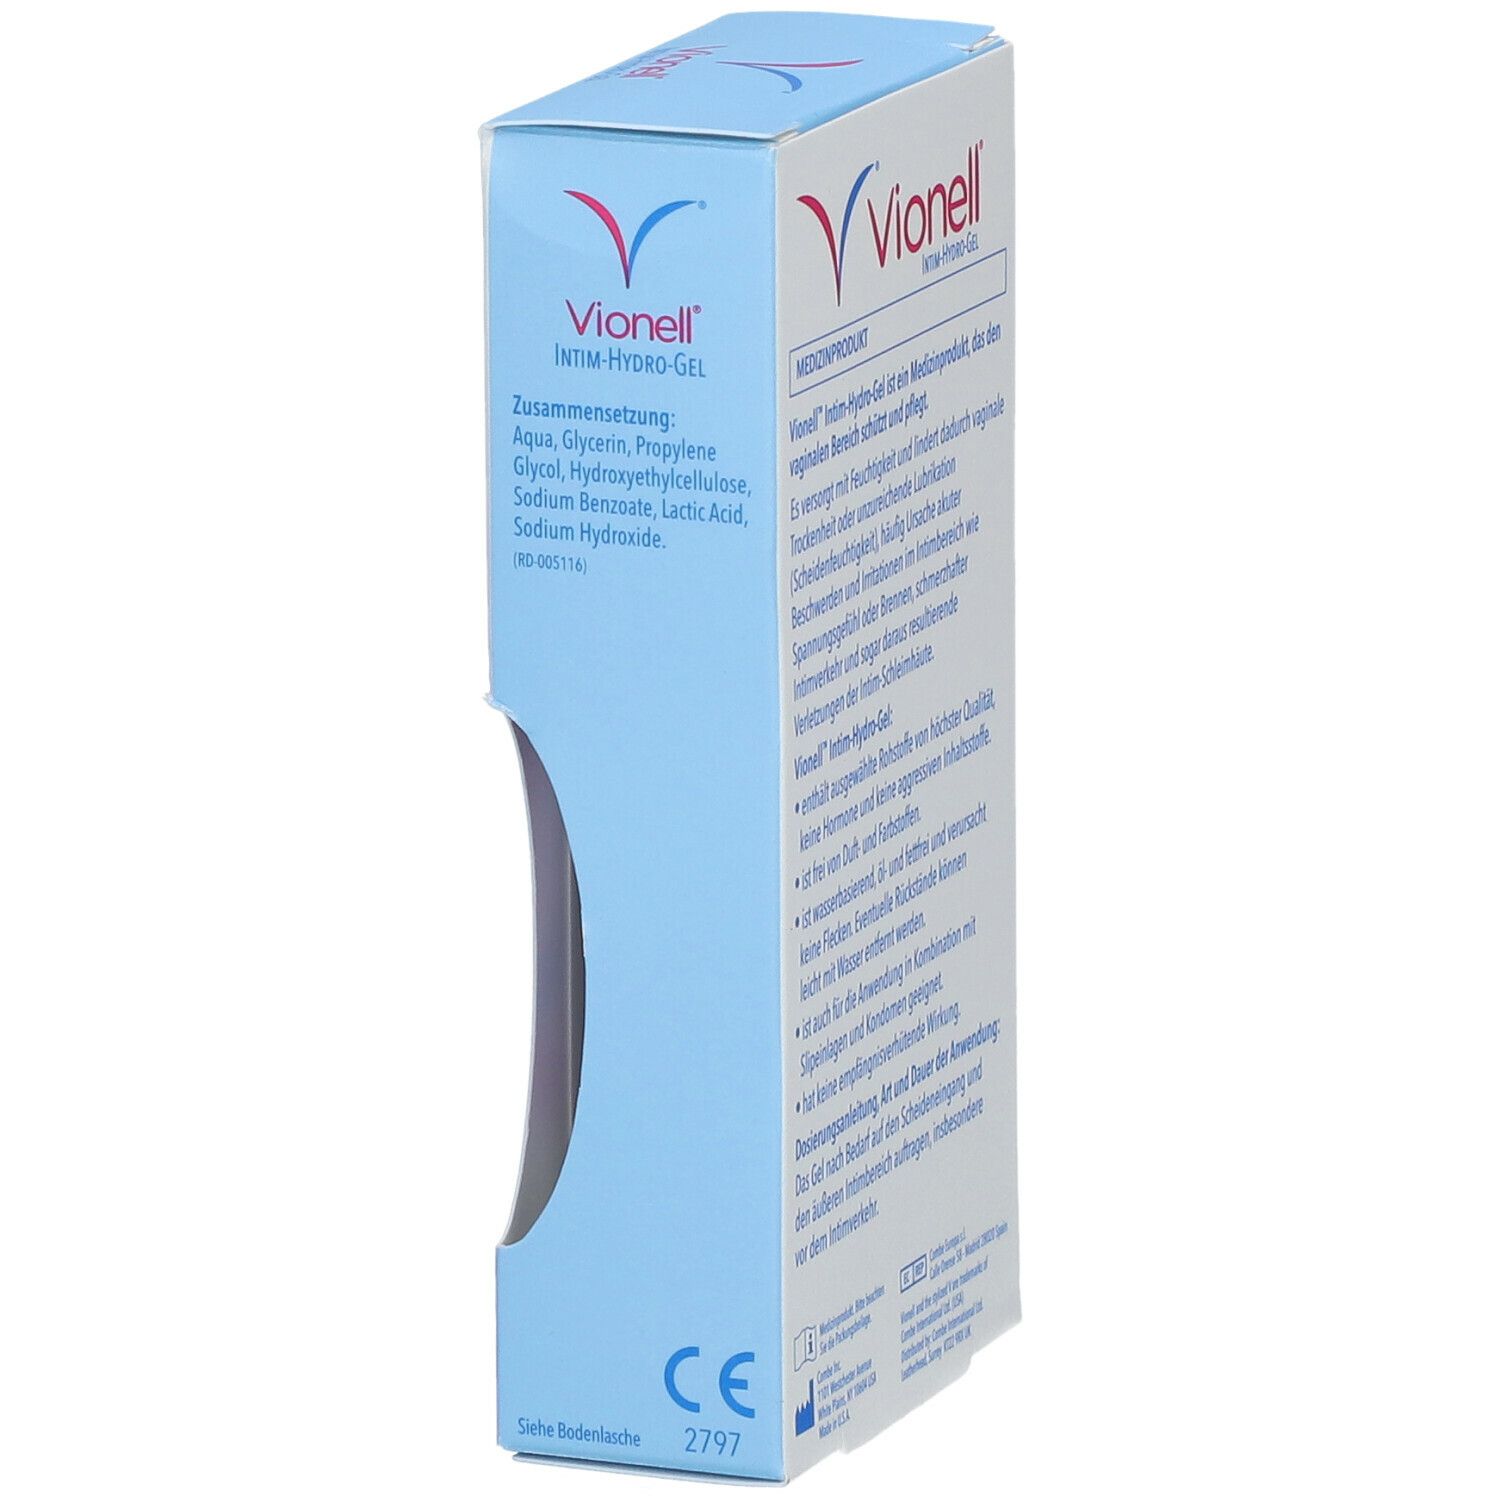 vionell™ Intim-Hydro-Gel